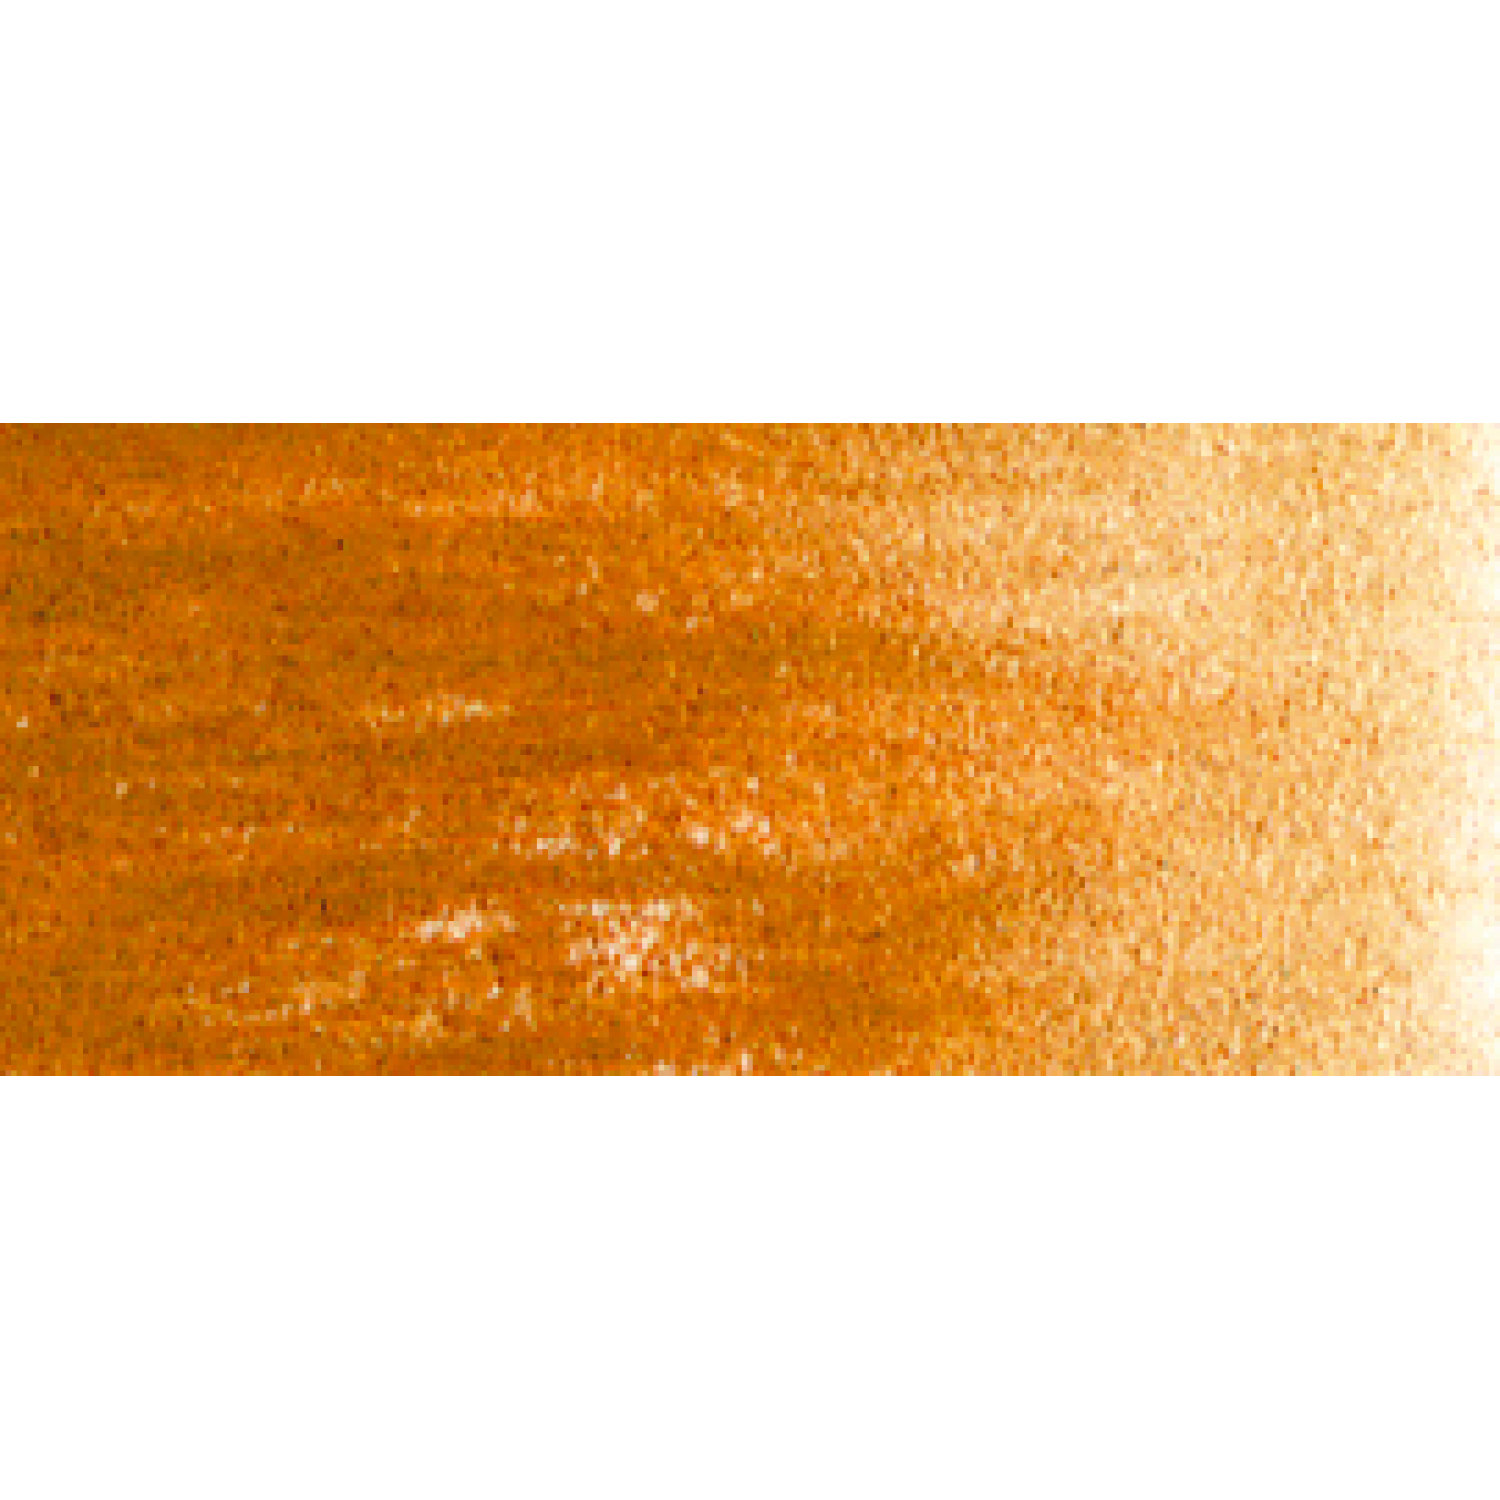 Derwent Tinted Charcoal- Burnt Orange